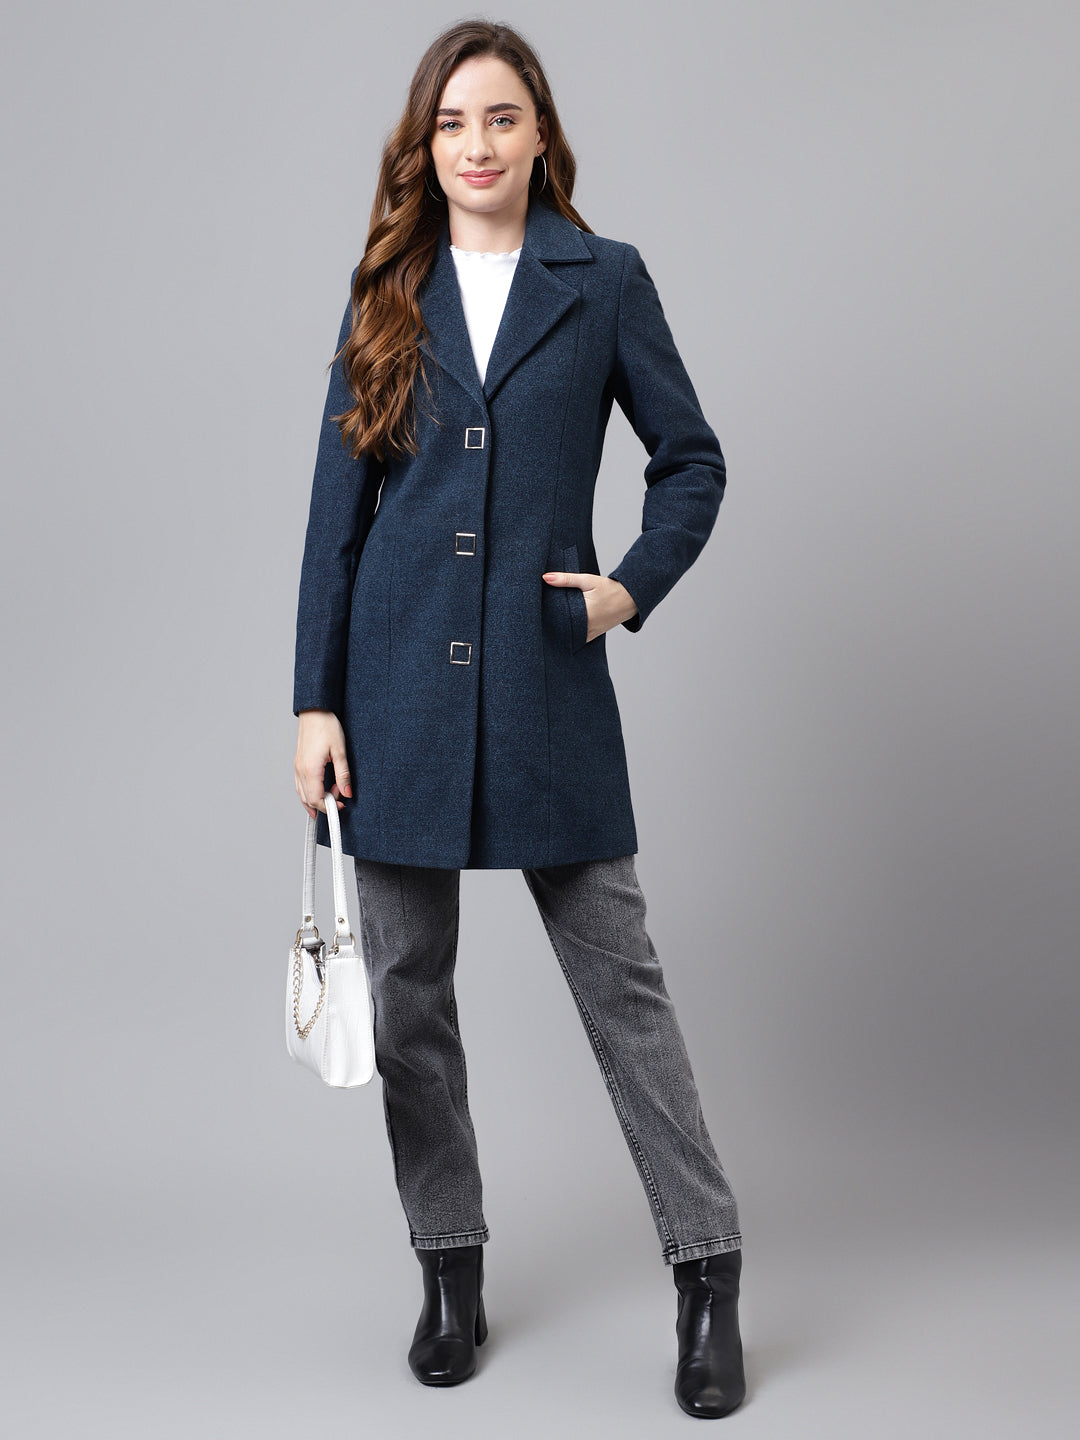 Full Sleeves Long Solid Overcoat